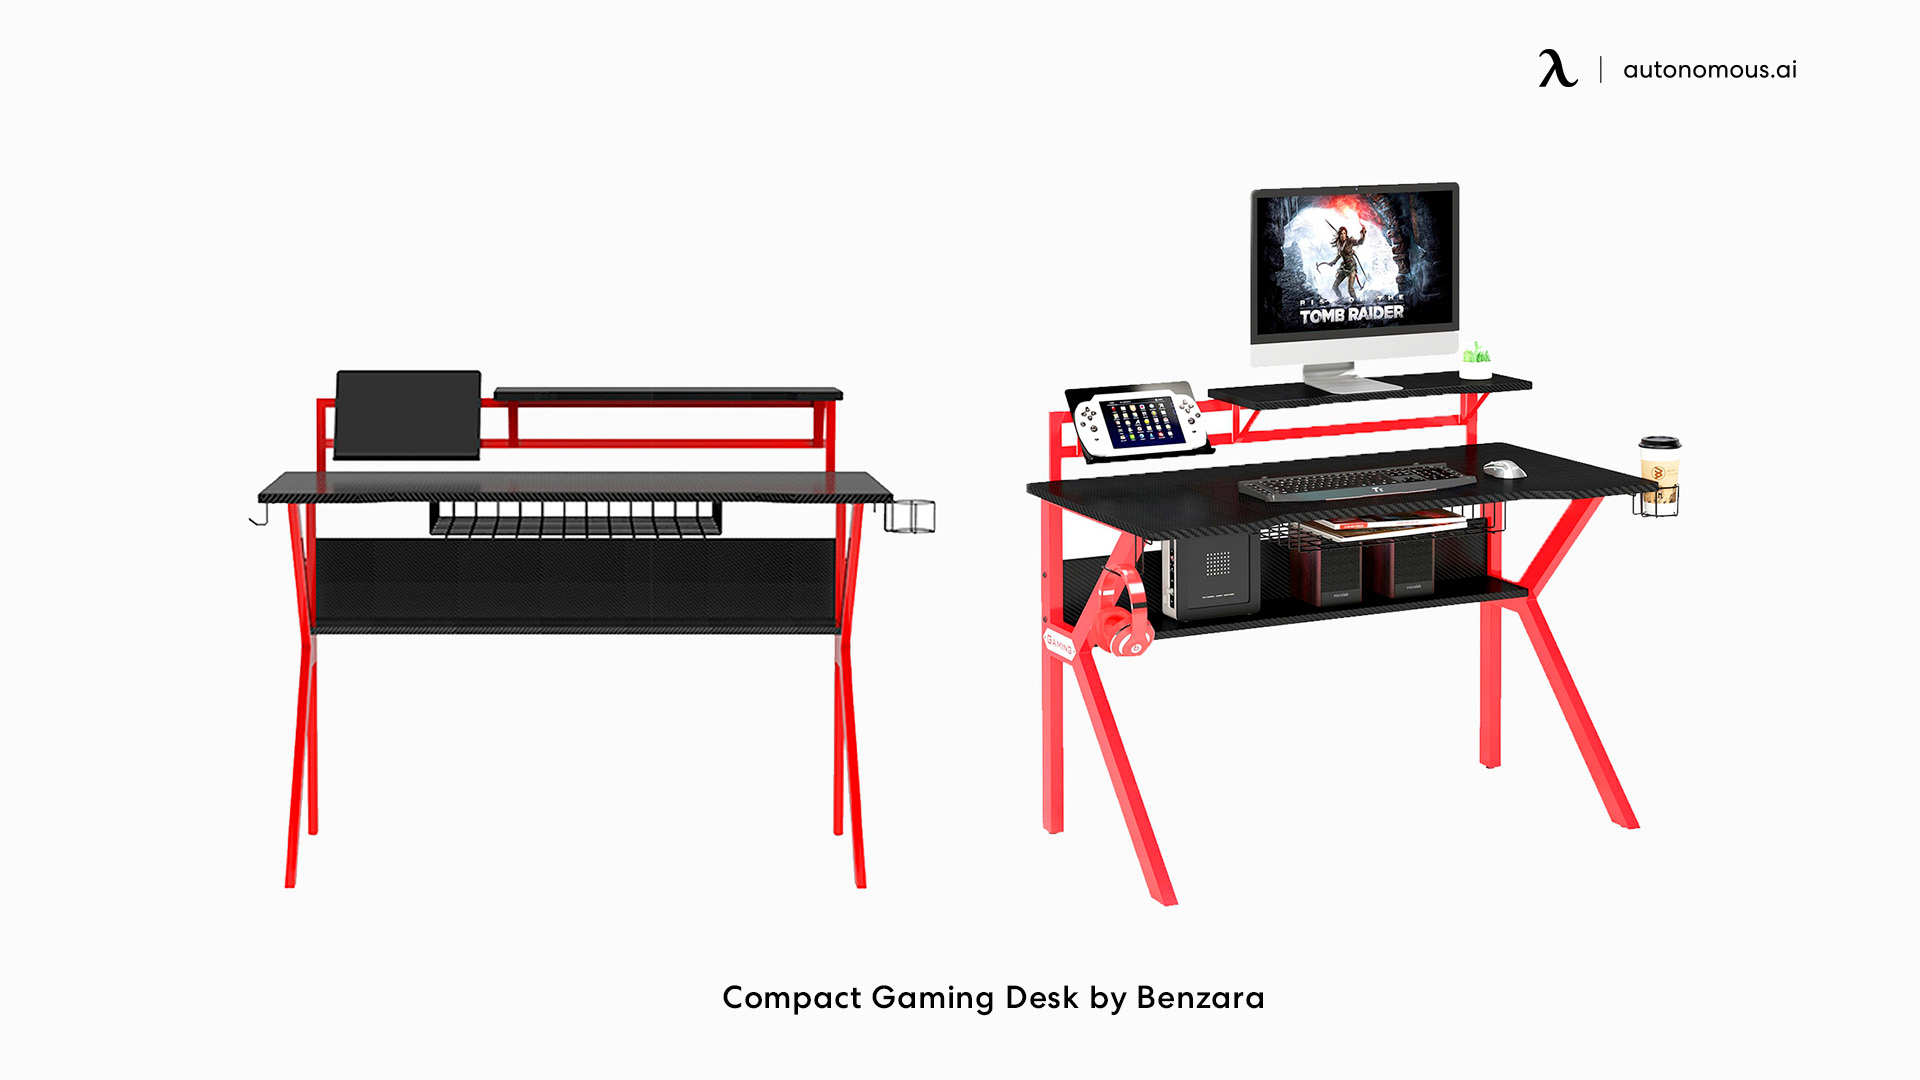 Benzara compact gaming desk